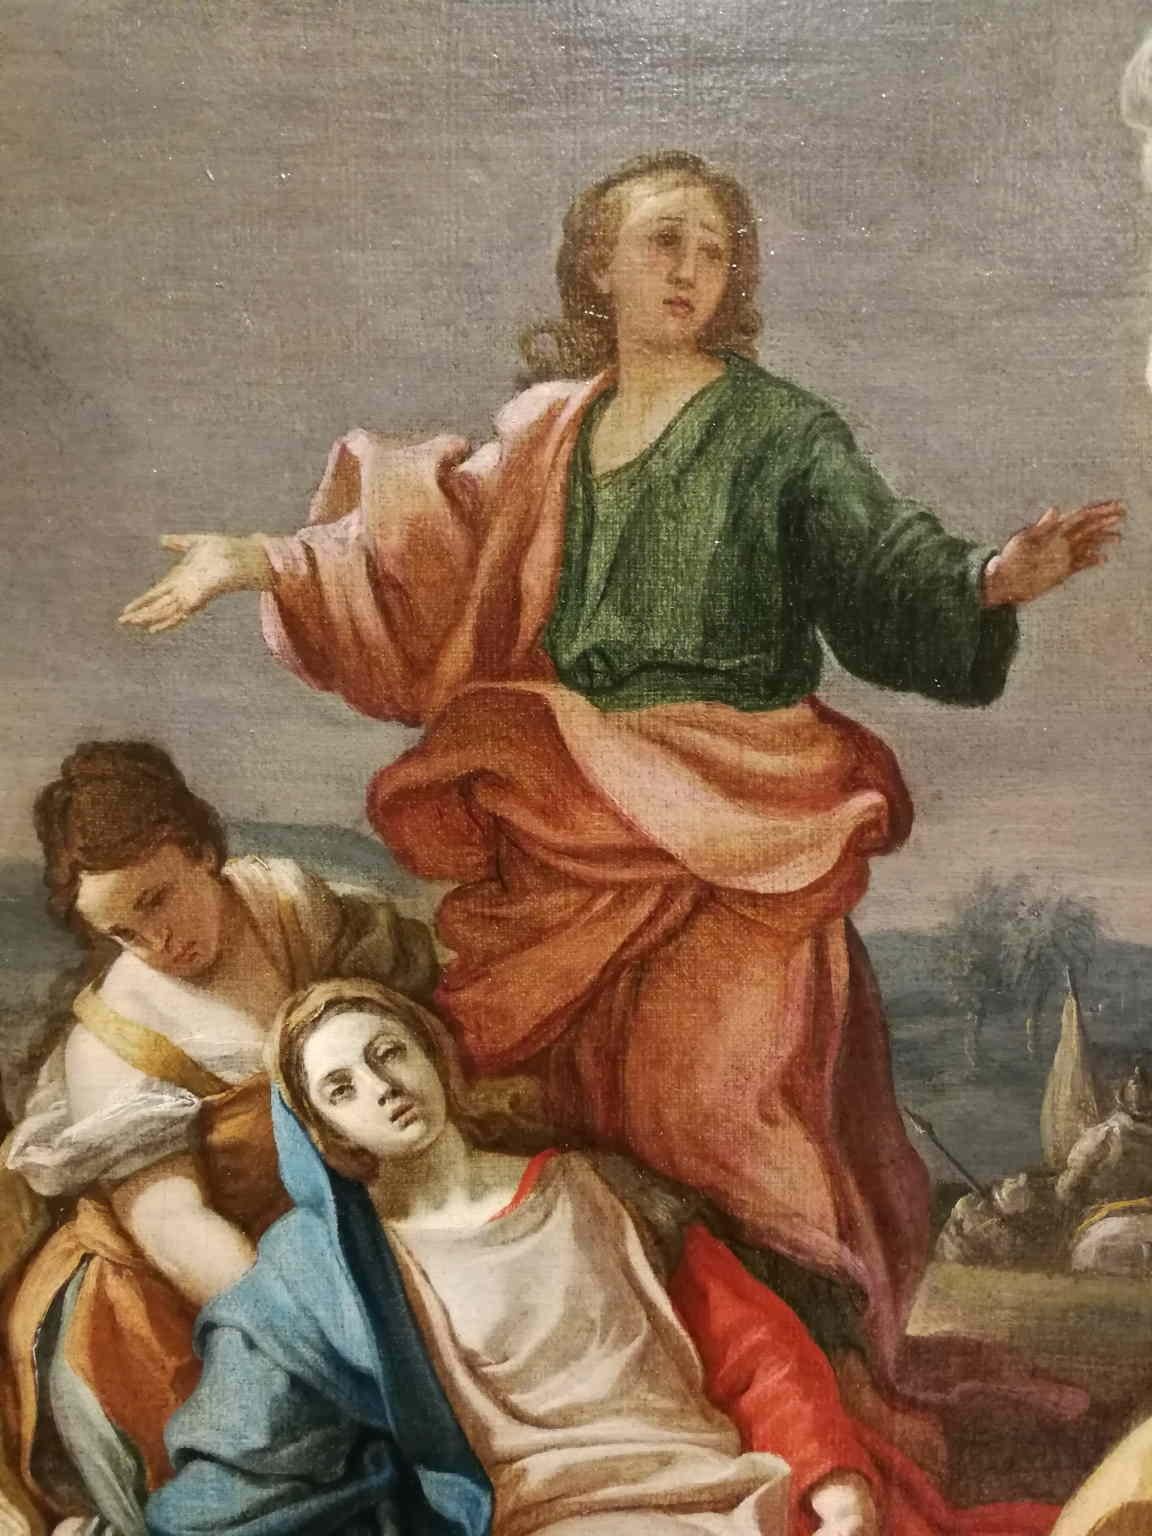 18th century religious art